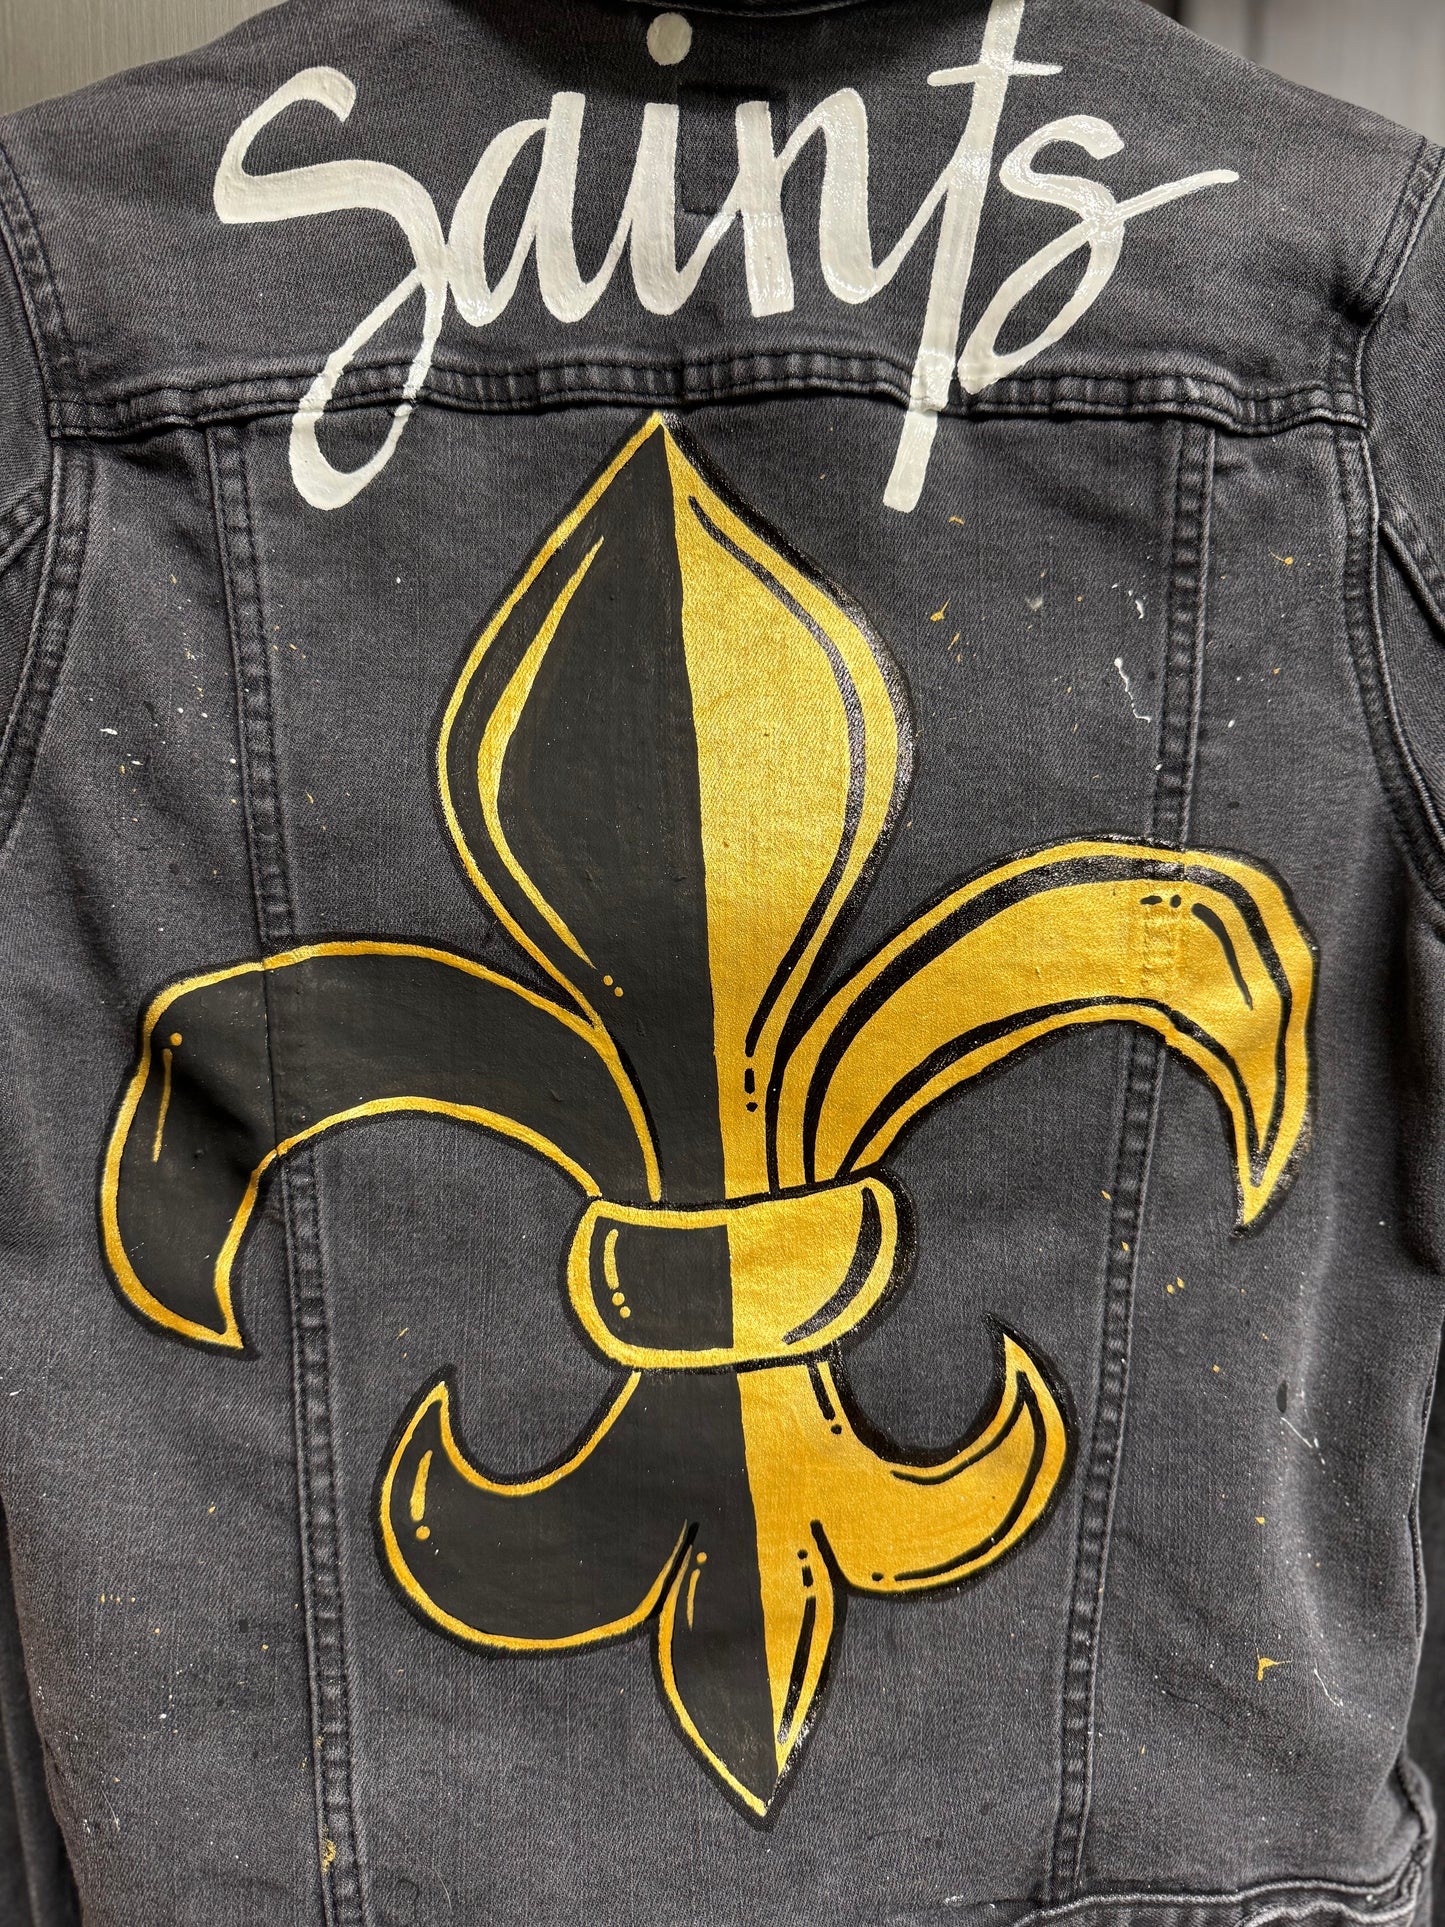 Hand Painted Jean Jacket:”Saints”, New Orleans Jacket, Hand Painted, NOLA Saints, Louisiana